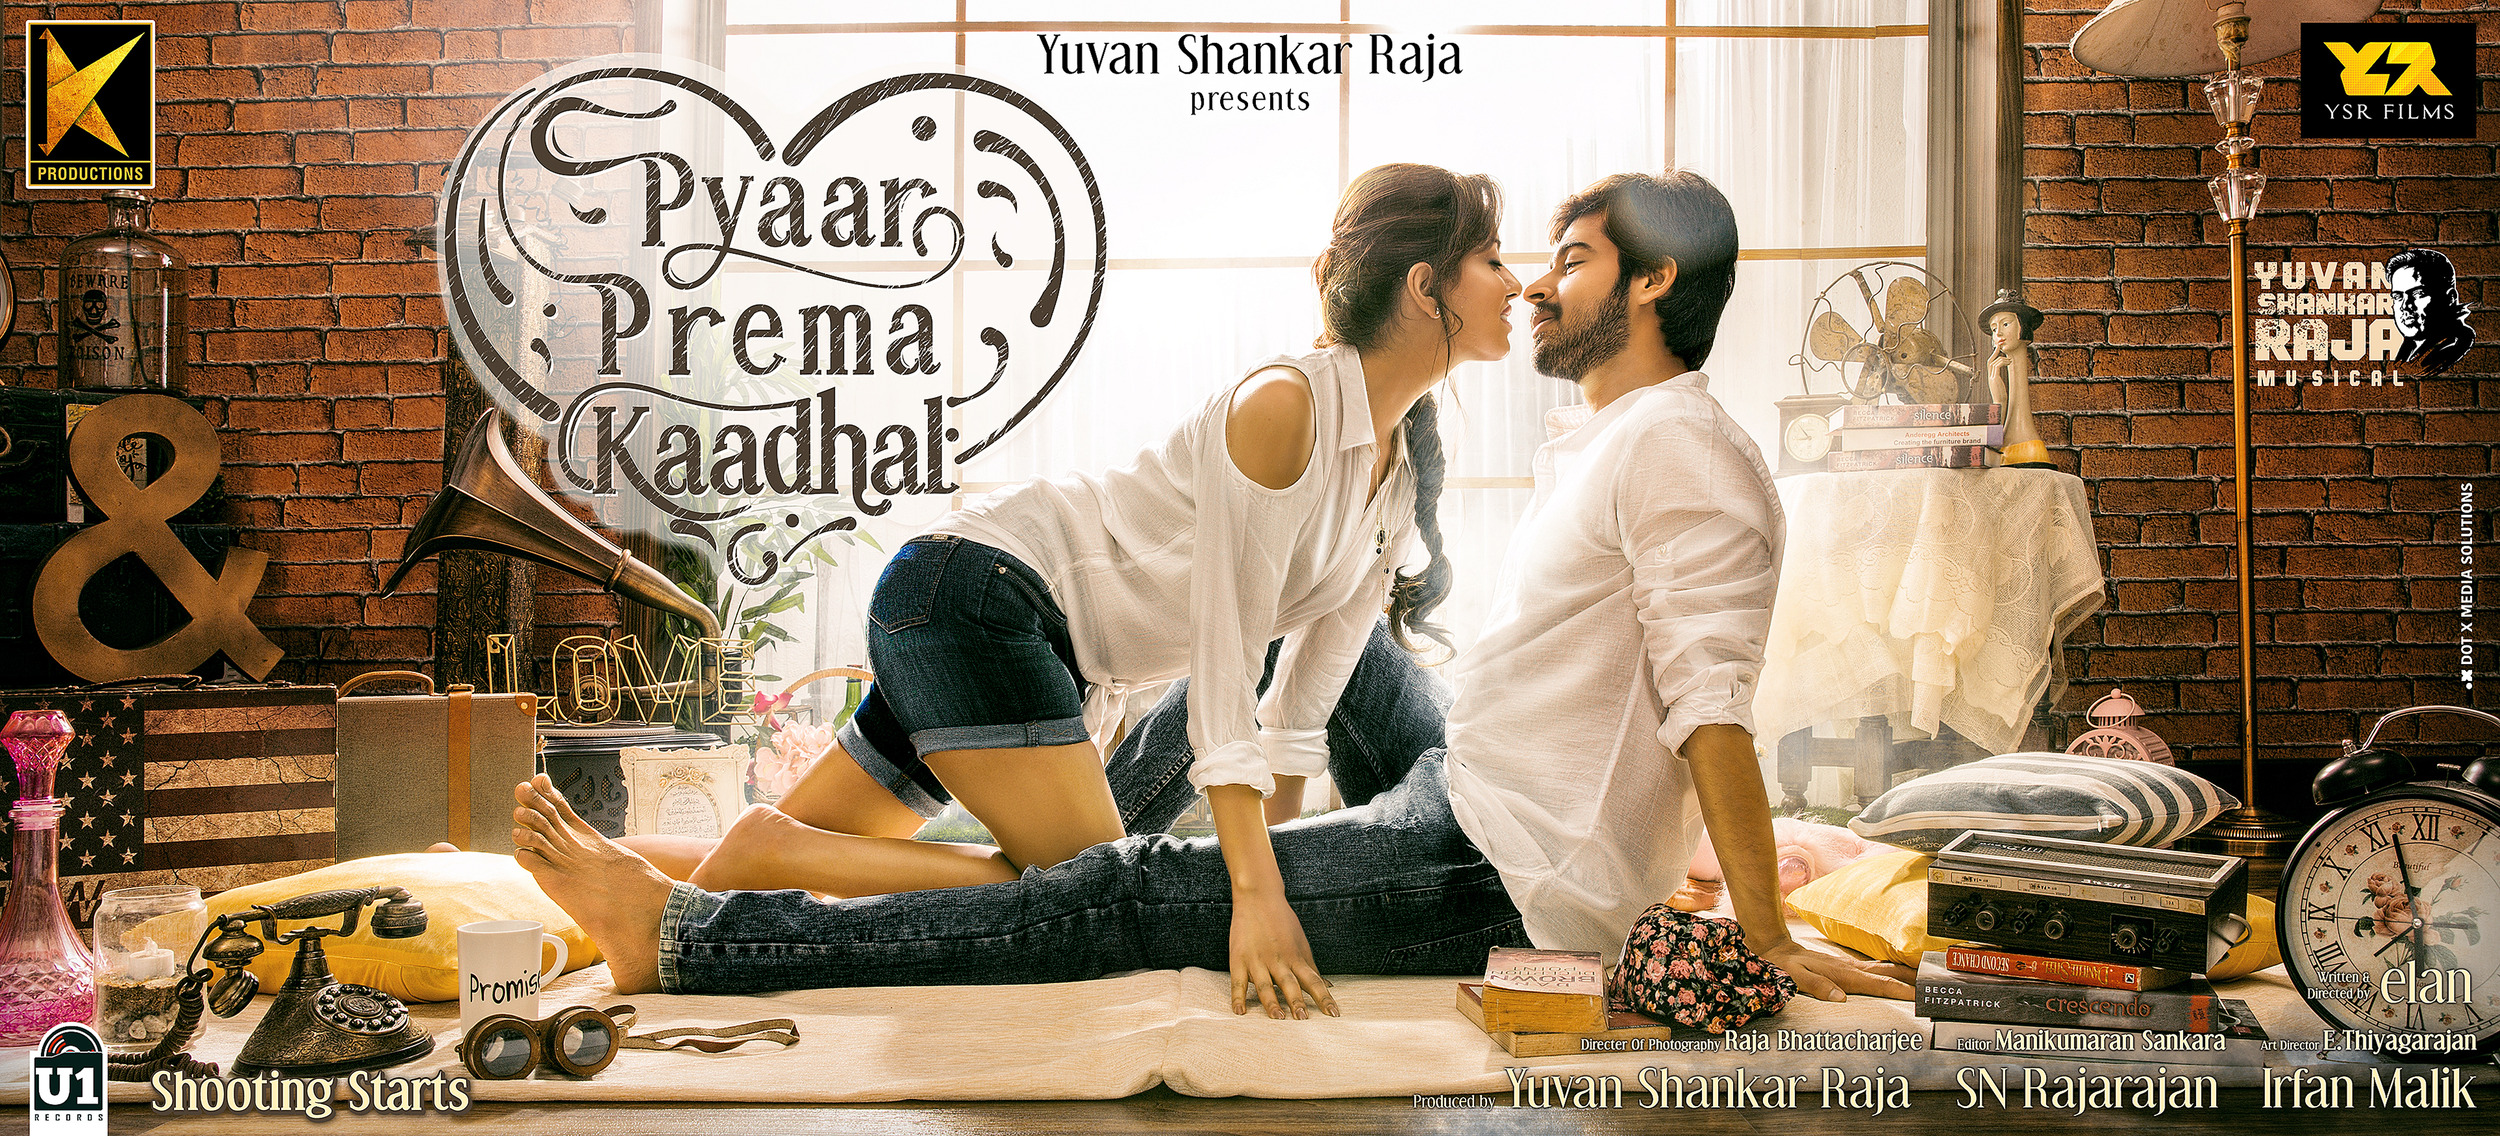 Mega Sized Movie Poster Image for Pyaar Prema Kaadhal (#9 of 10)